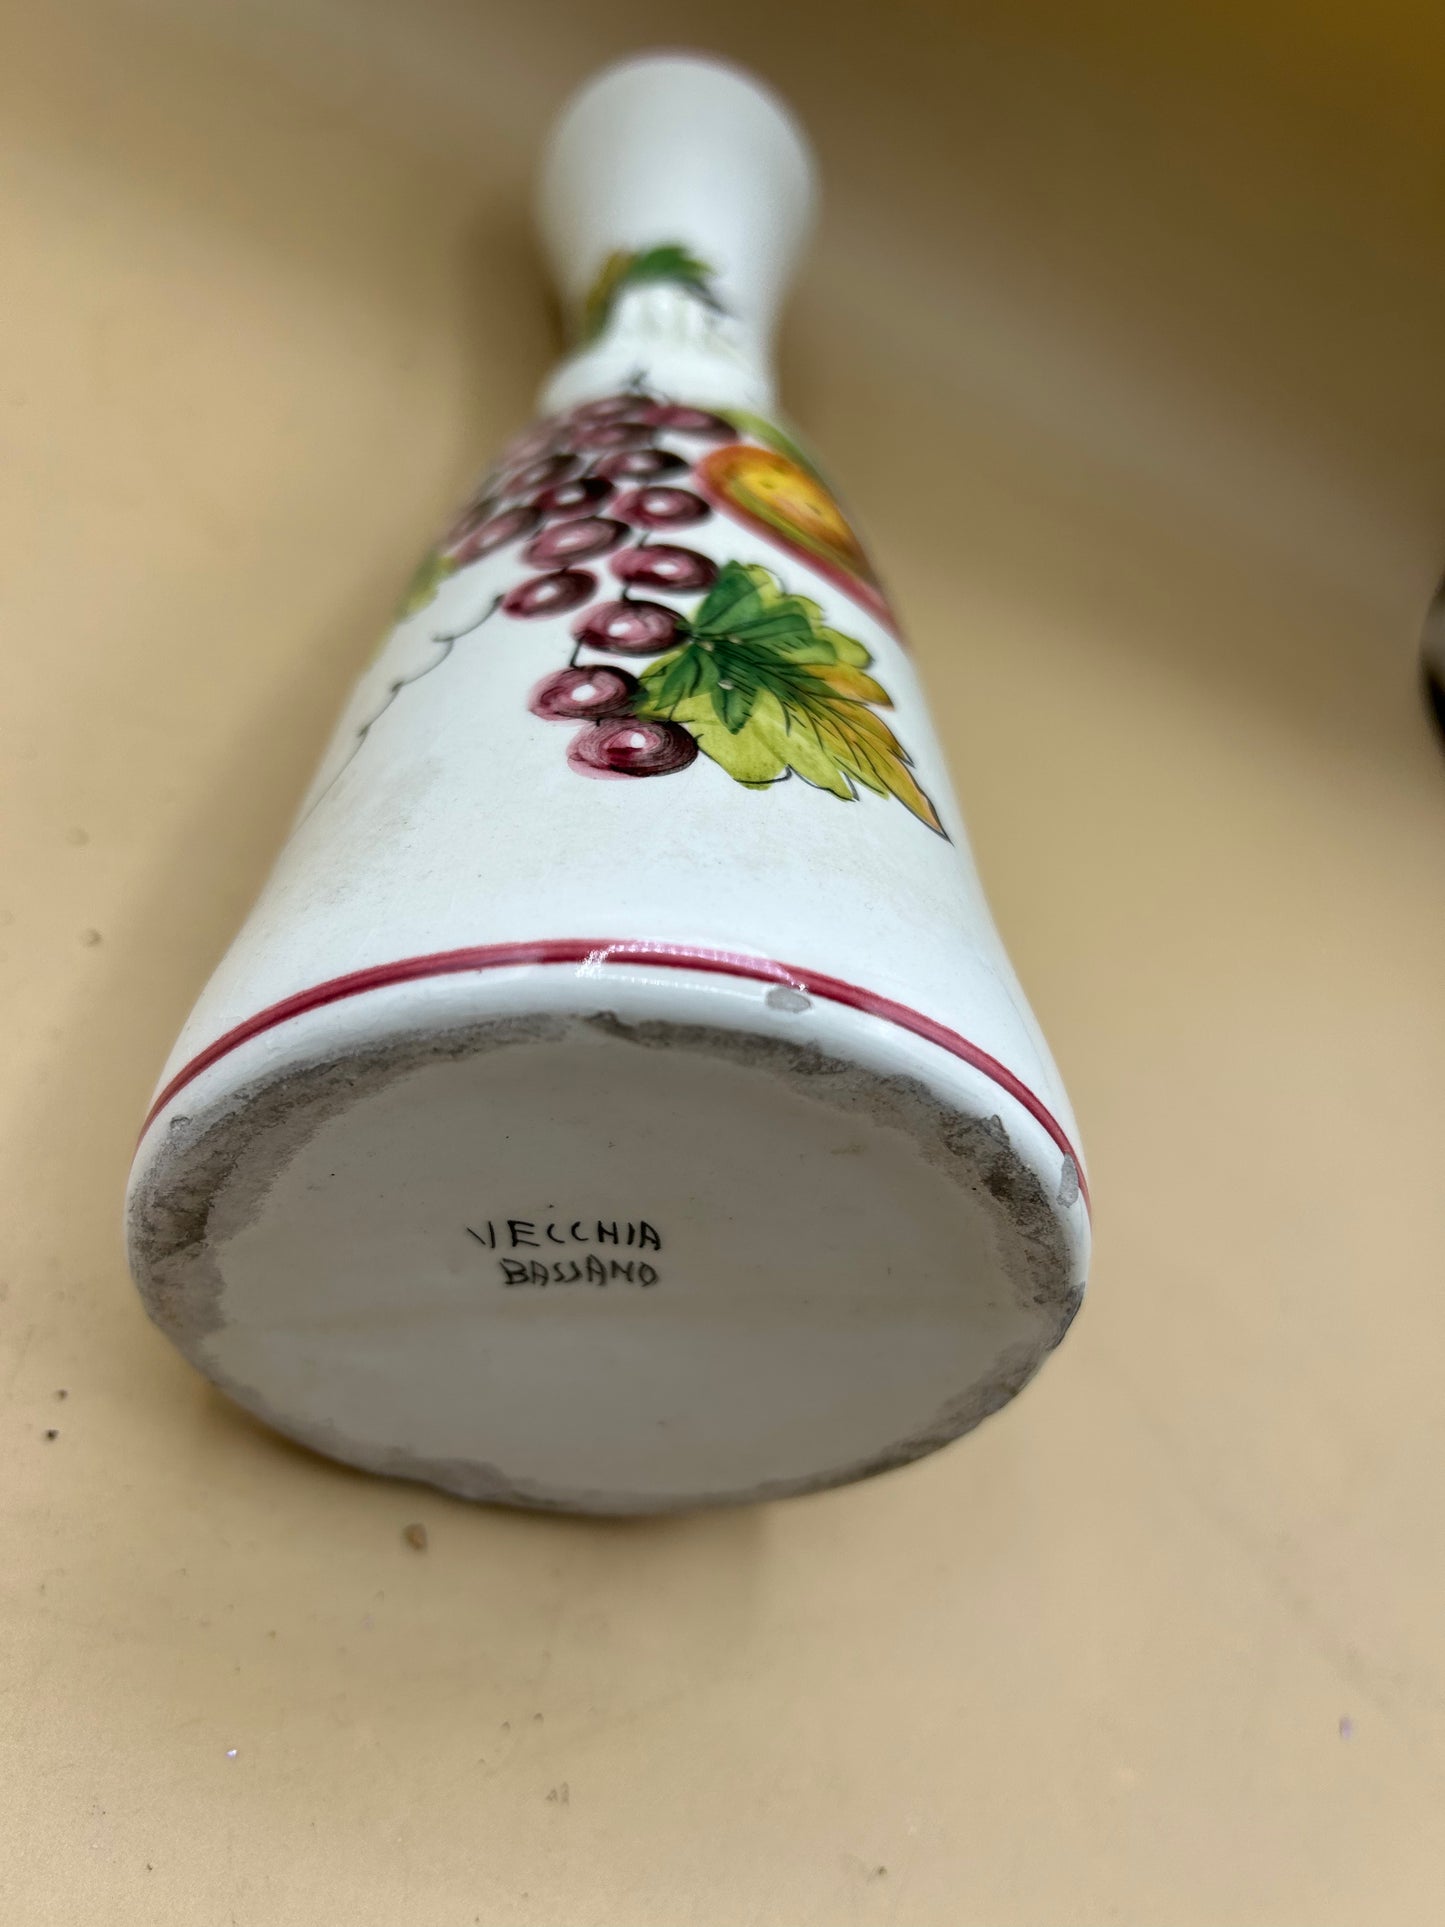 Old Bassano hand-painted ceramic wine bottle